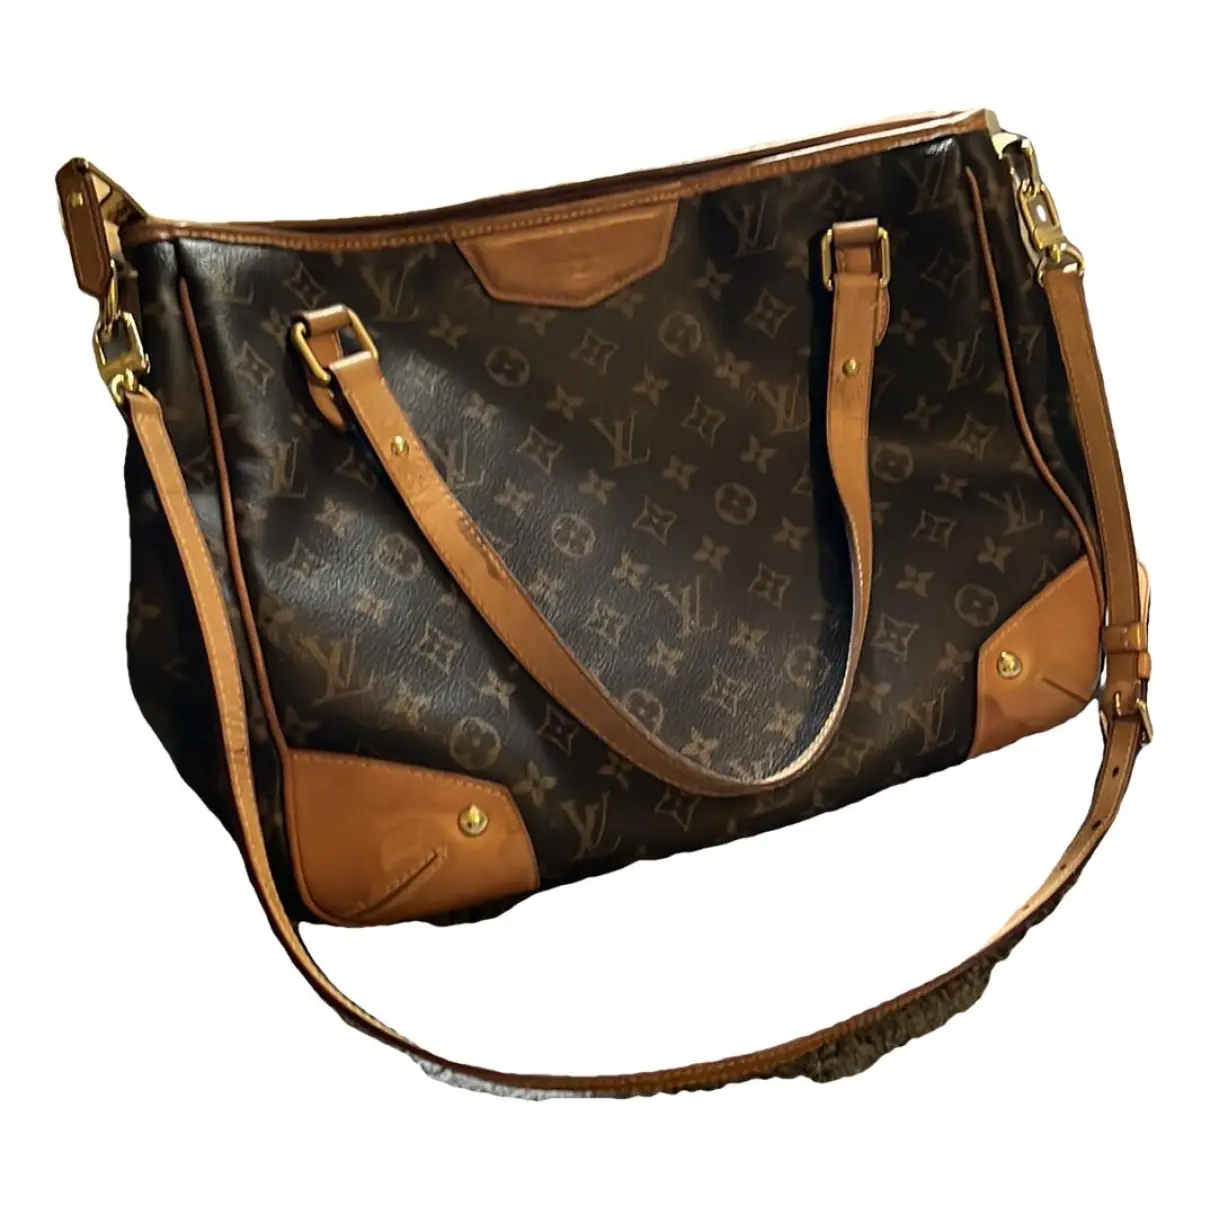 Estrela leather handbag